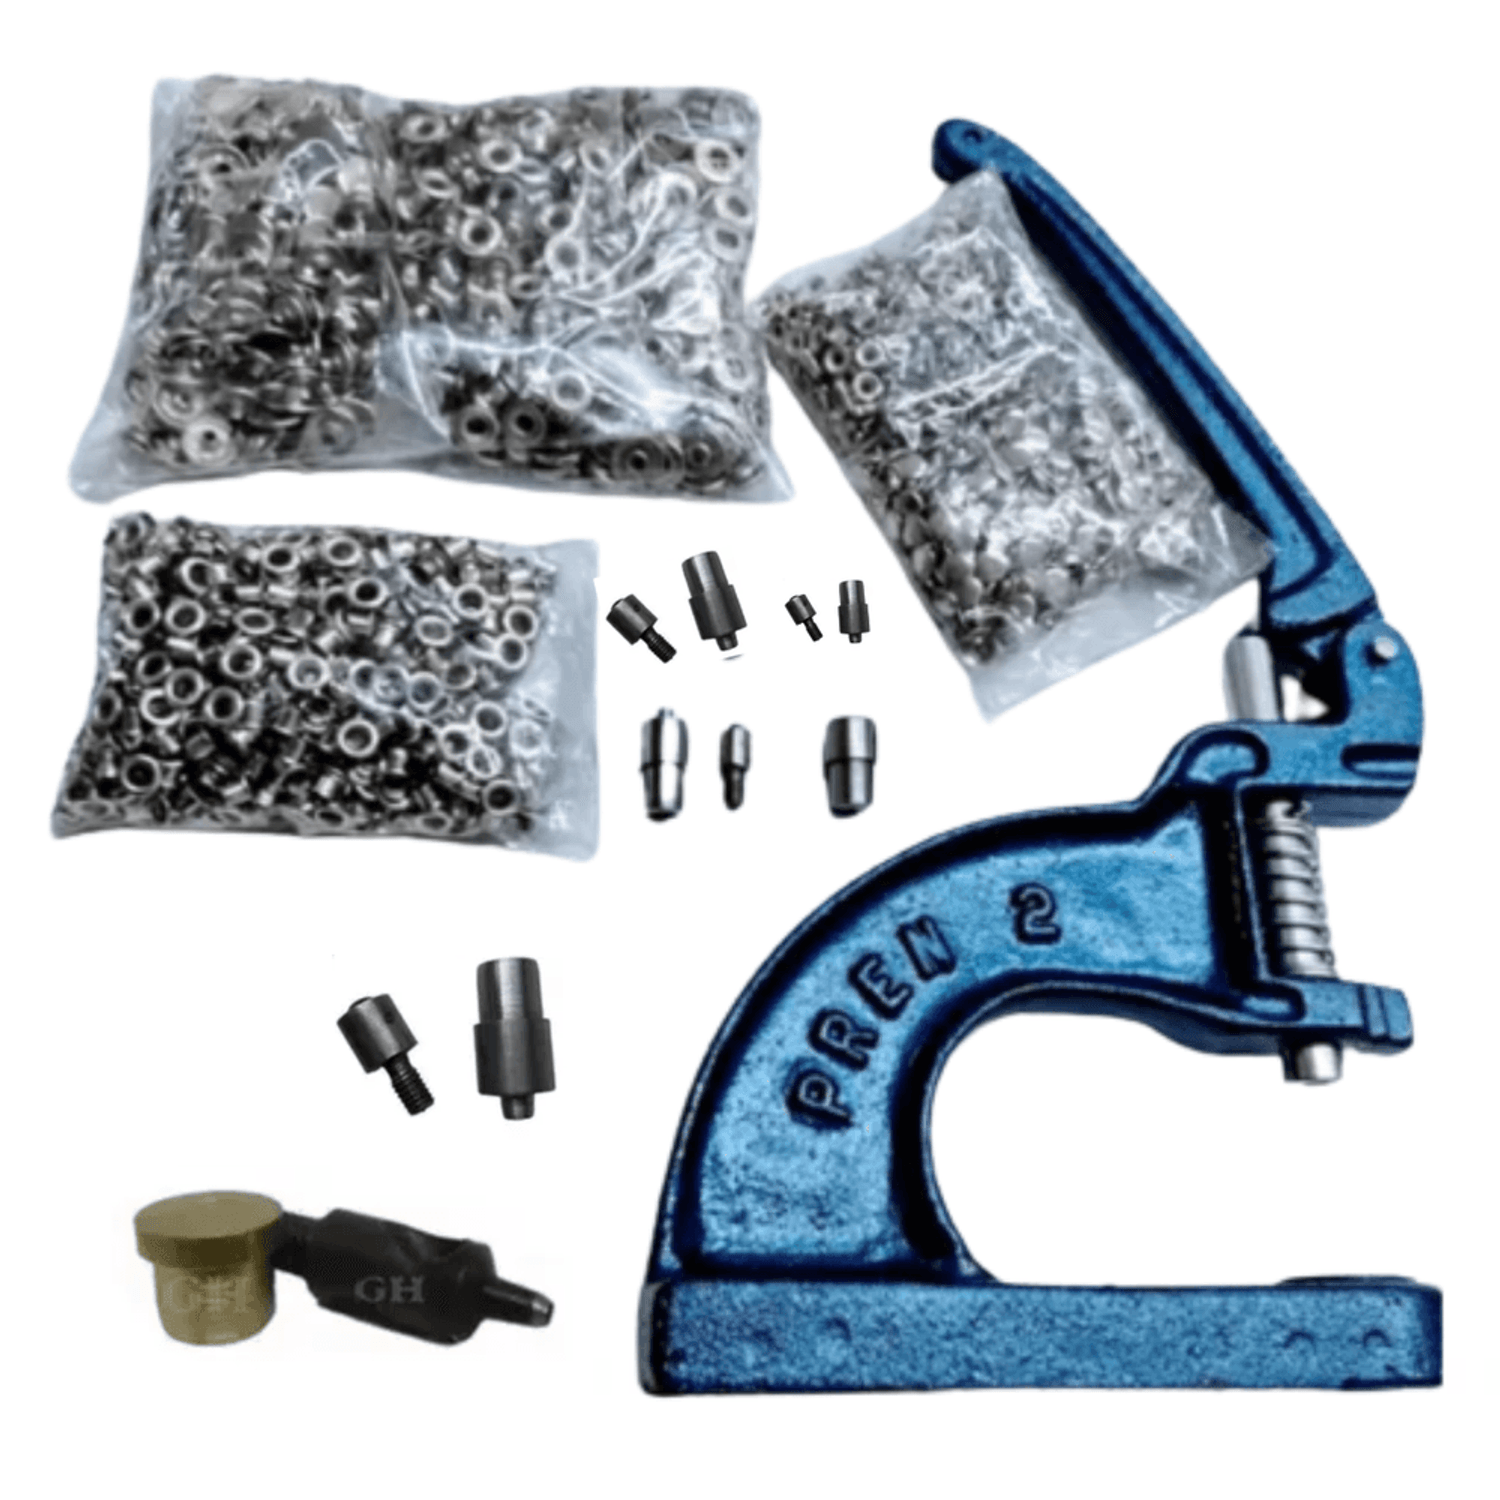 Maquina Remachadora Kit Completo para Broches de 15mm Y Ojales Metálicos  Más Remaches de 9mm I Oechsle - Oechsle